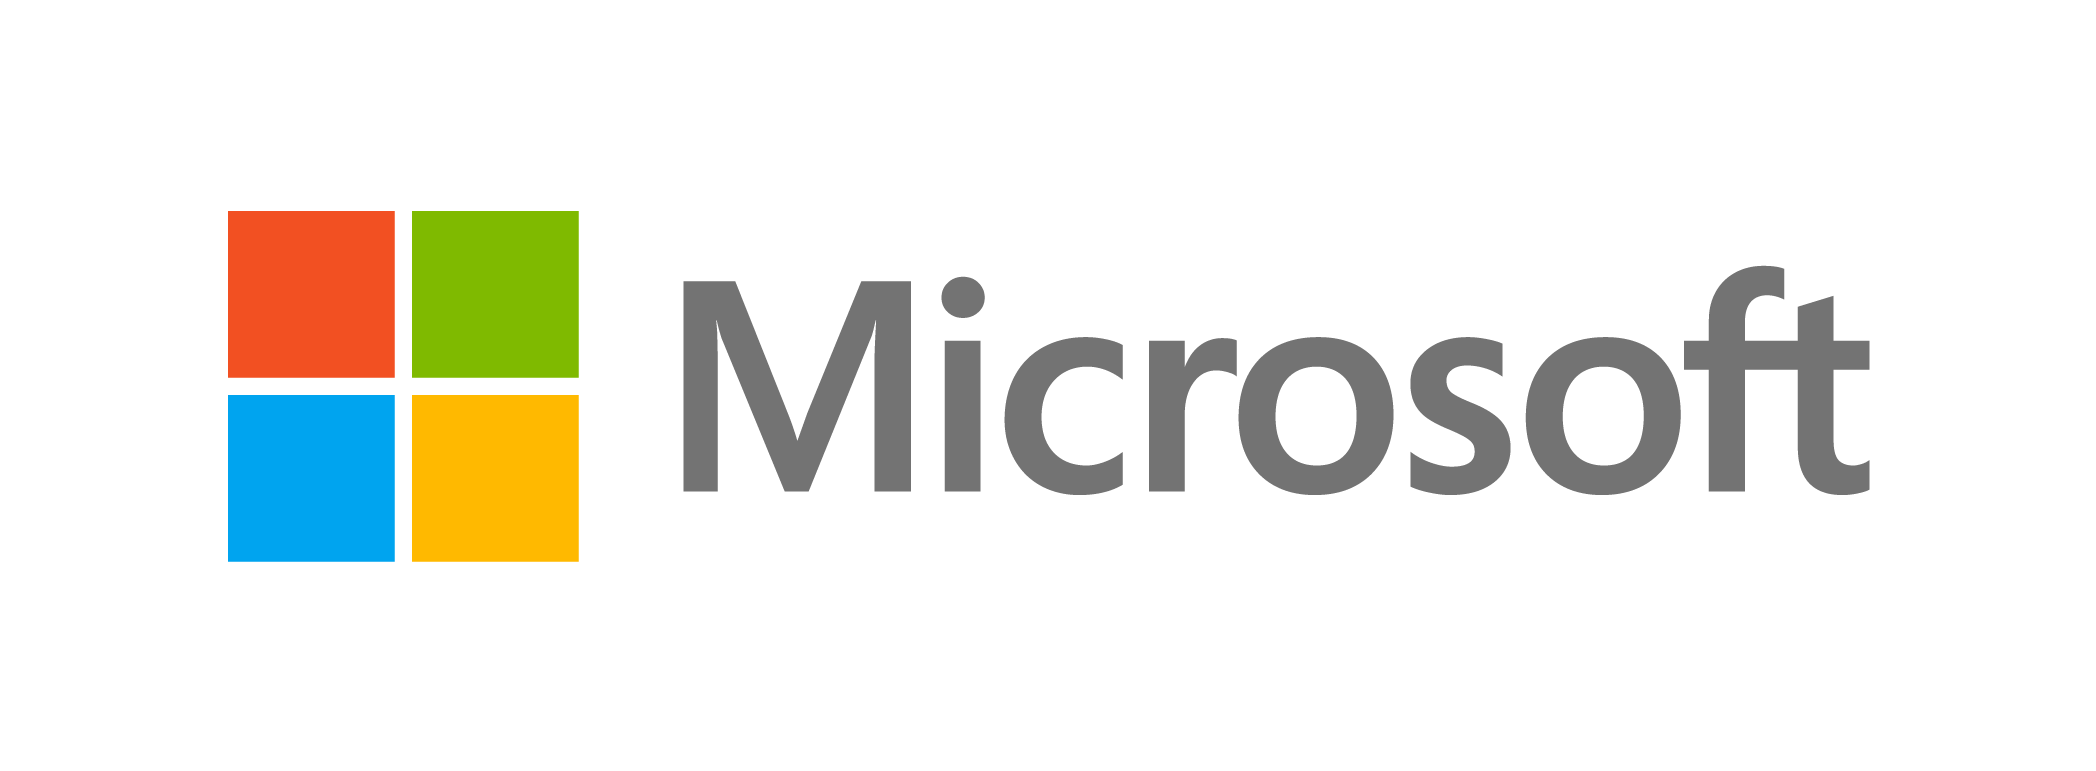 The Microsoft Logo